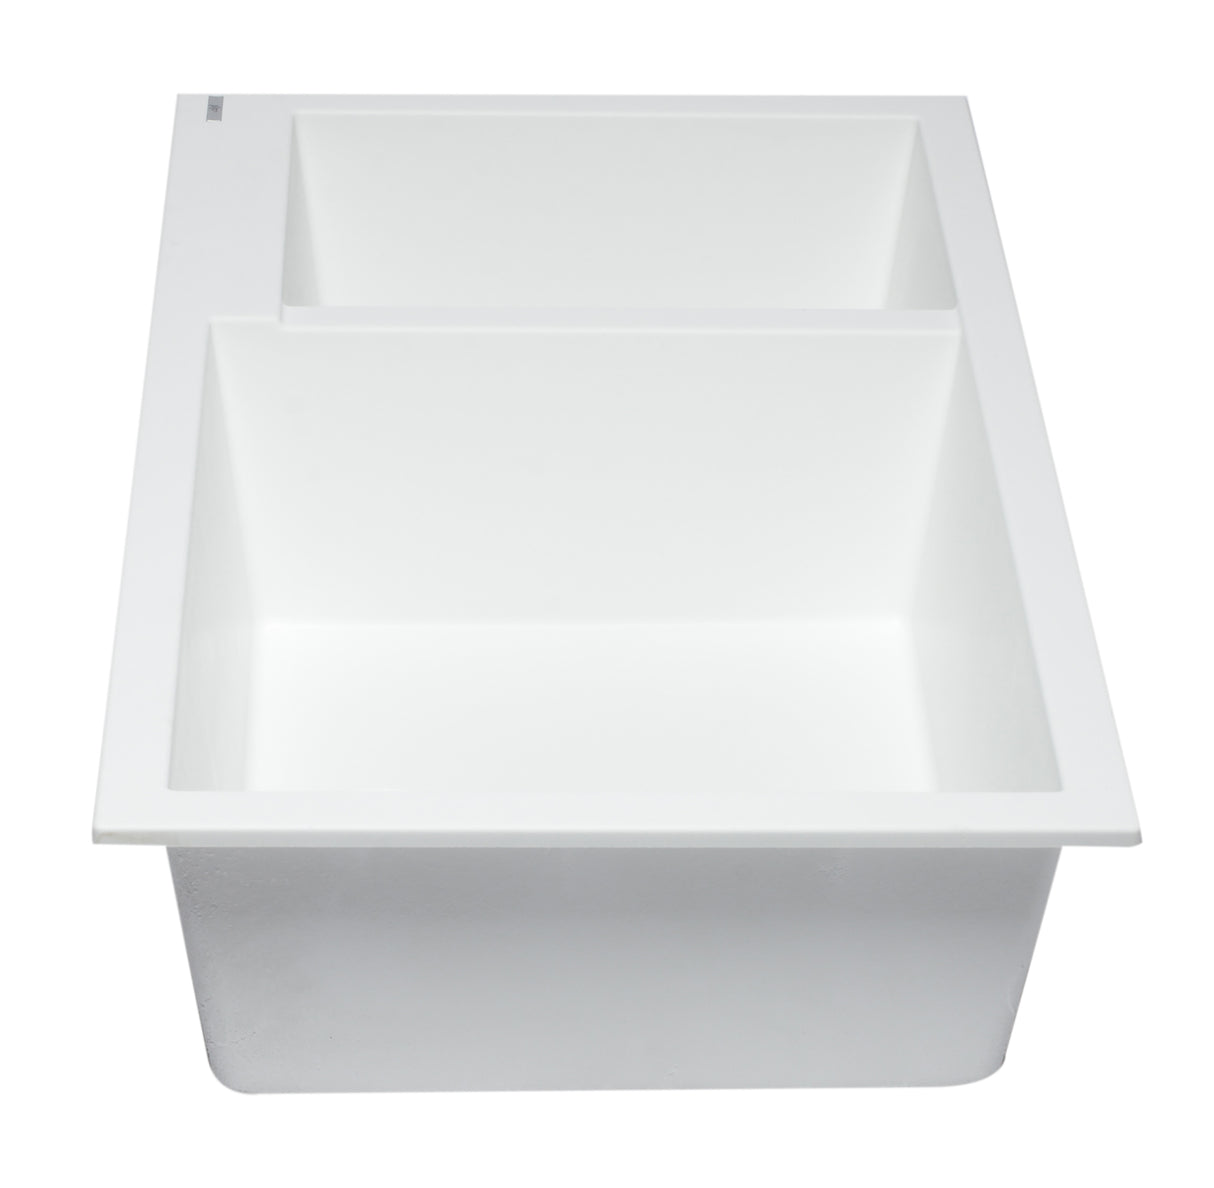 ALFI brand AB3319UM-W White 34" Double Bowl Undermount Granite Composite Kitchen Sink